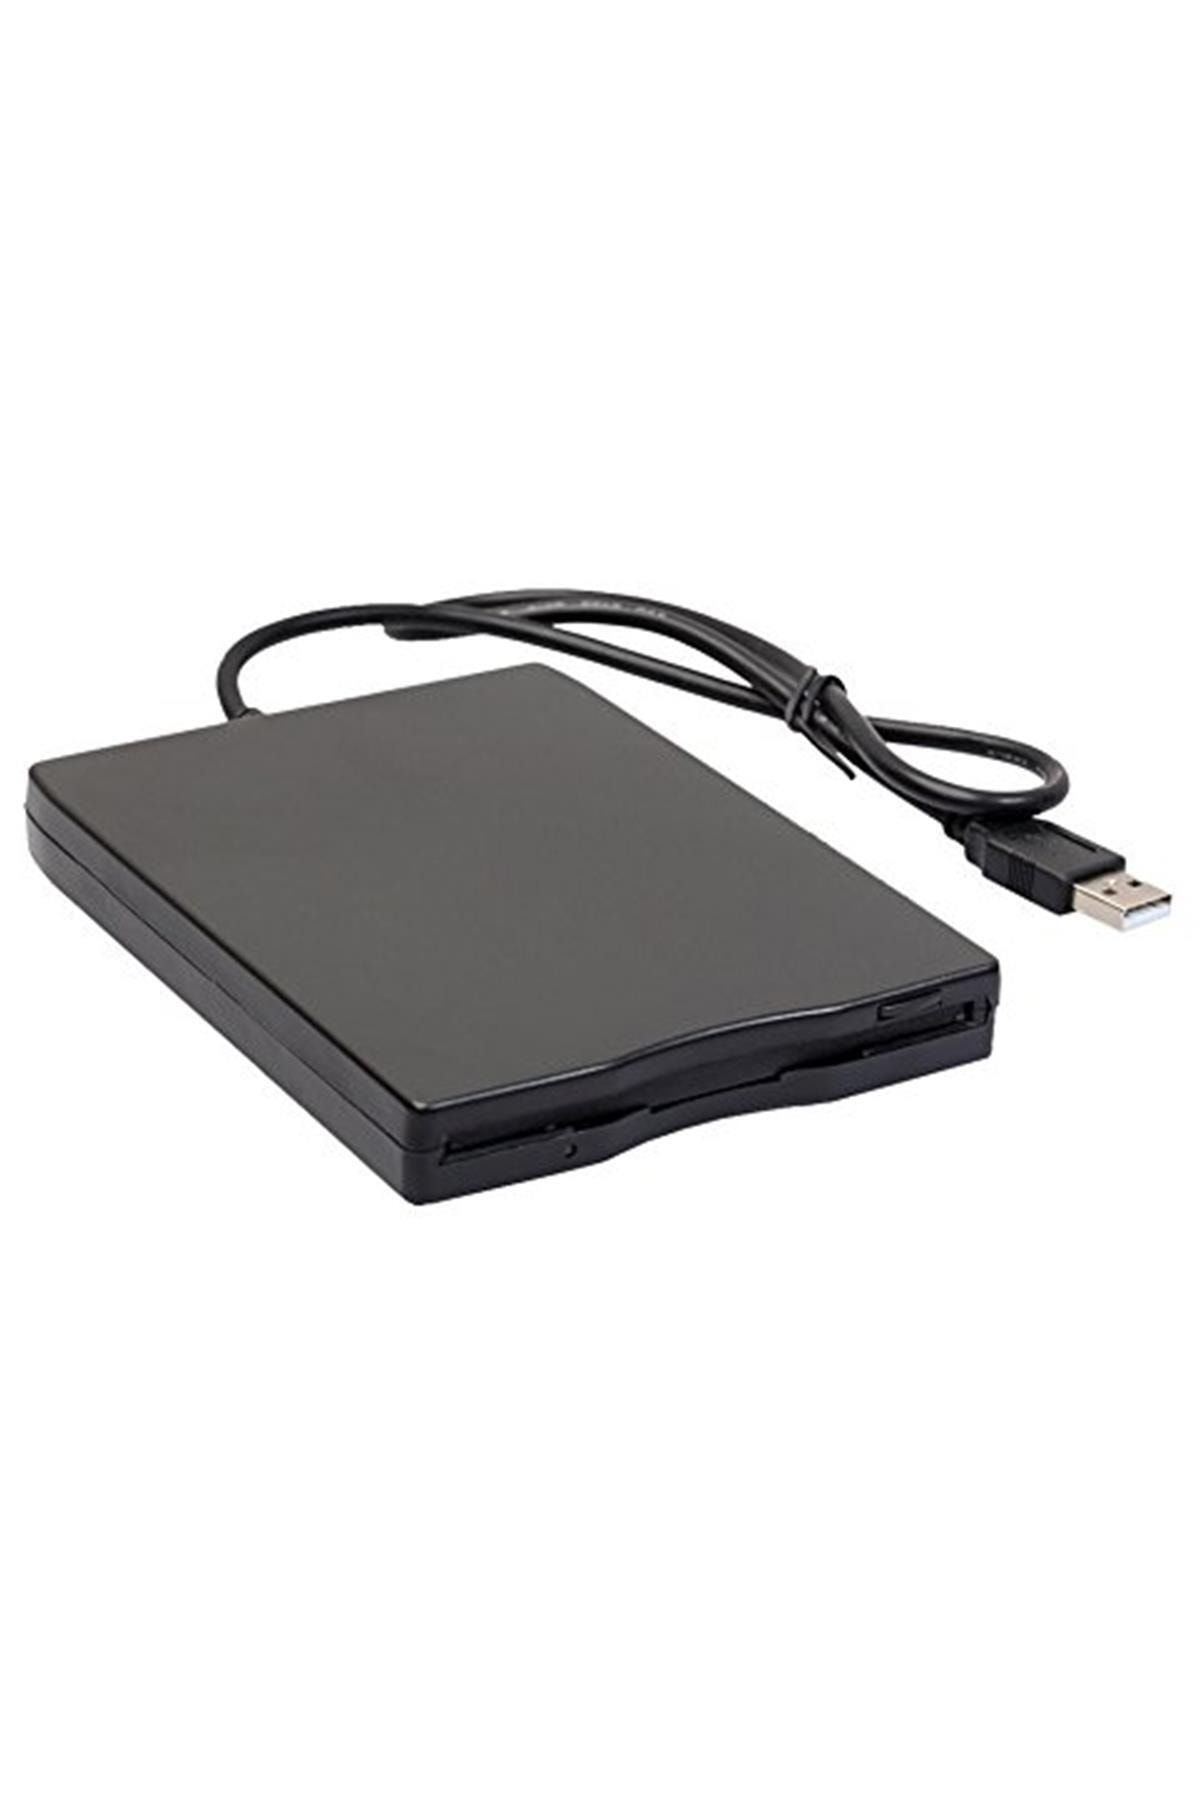 Alfais Marka: 4407 Usbto 1.44 Floppy Disket Okuyucu Çevirici Dönüştürücü Adaptör Kategori: Hdmı Kab